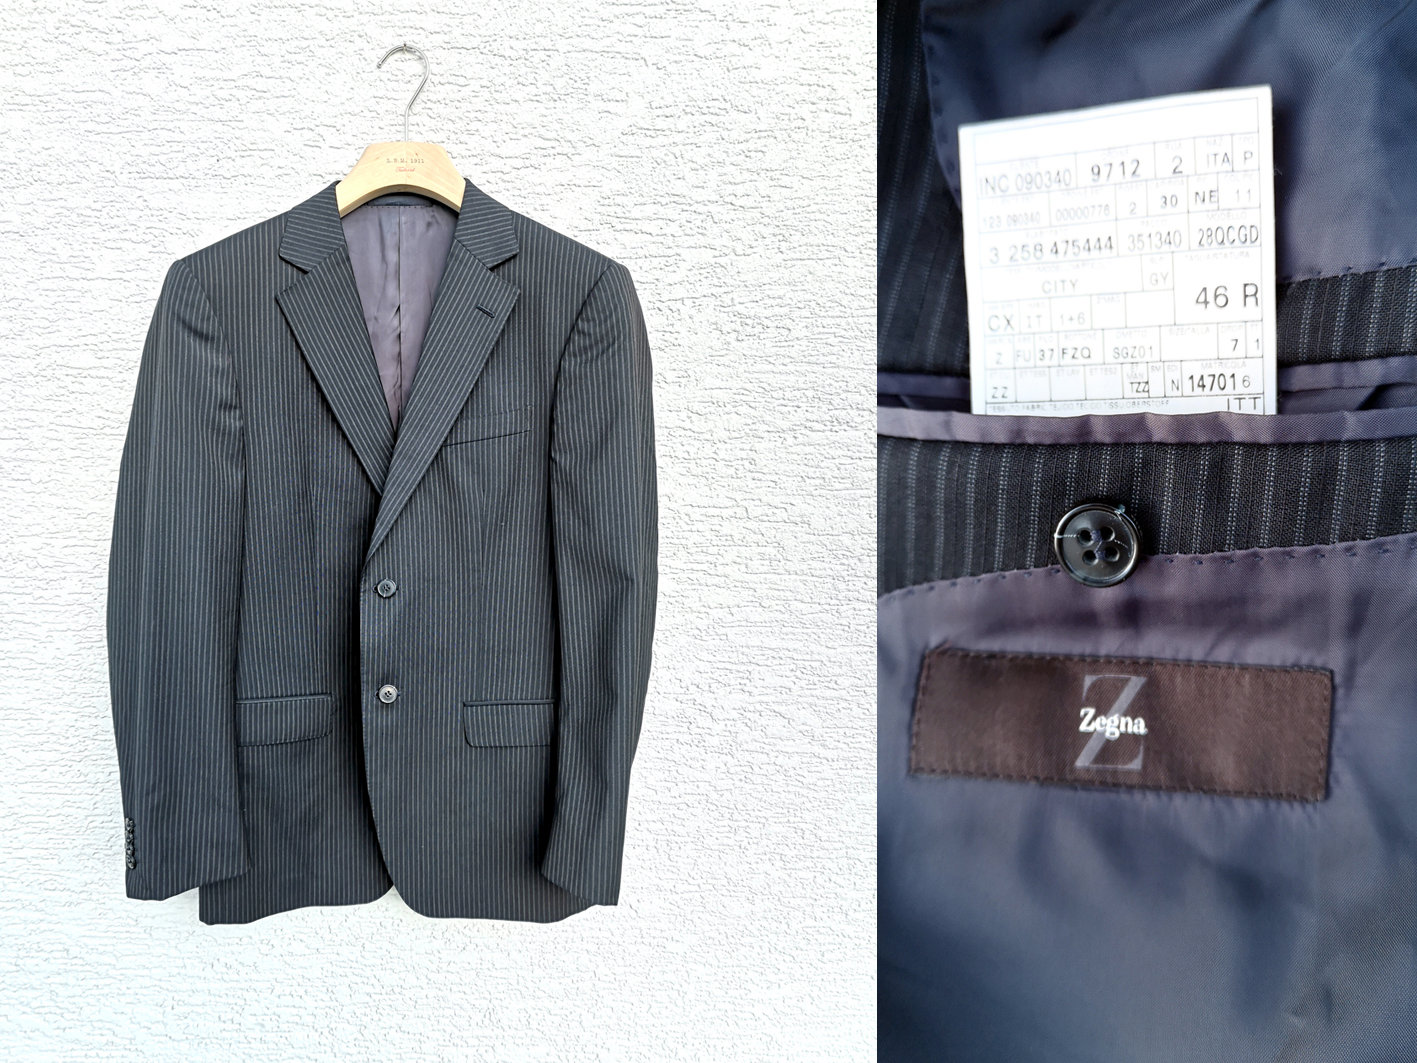 NWOT Louis Vuitton Uniforms Grey Peak Lapel Sport Coat Blazer Jacket Size  46/36